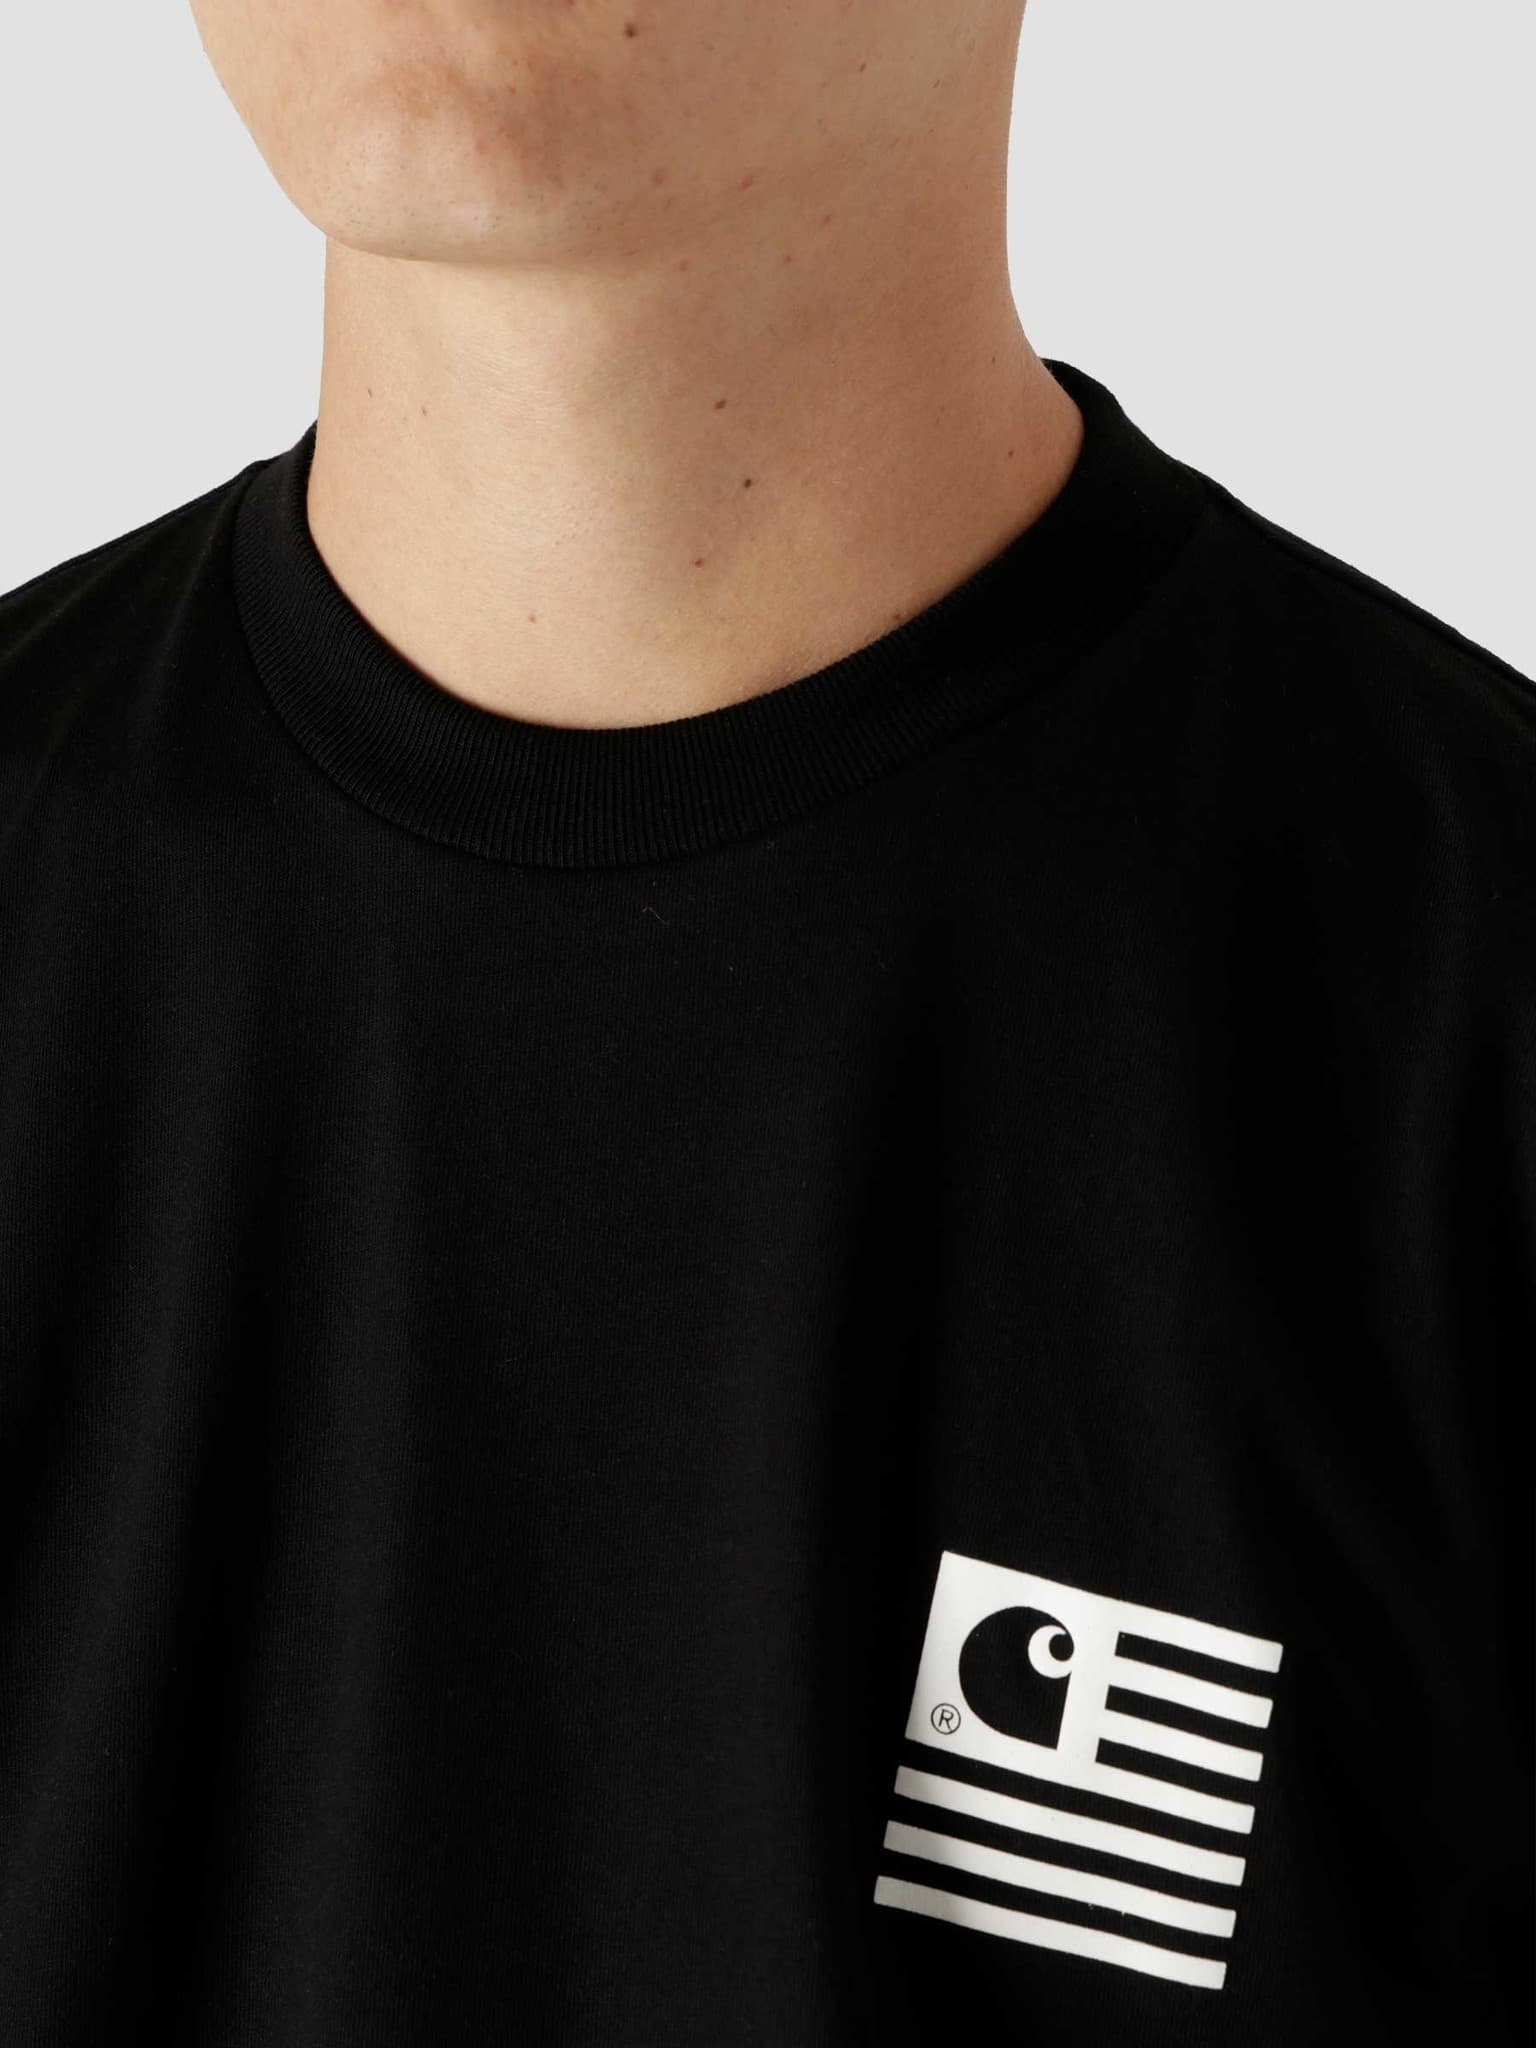 Fade State T-Shirt Black White I029607